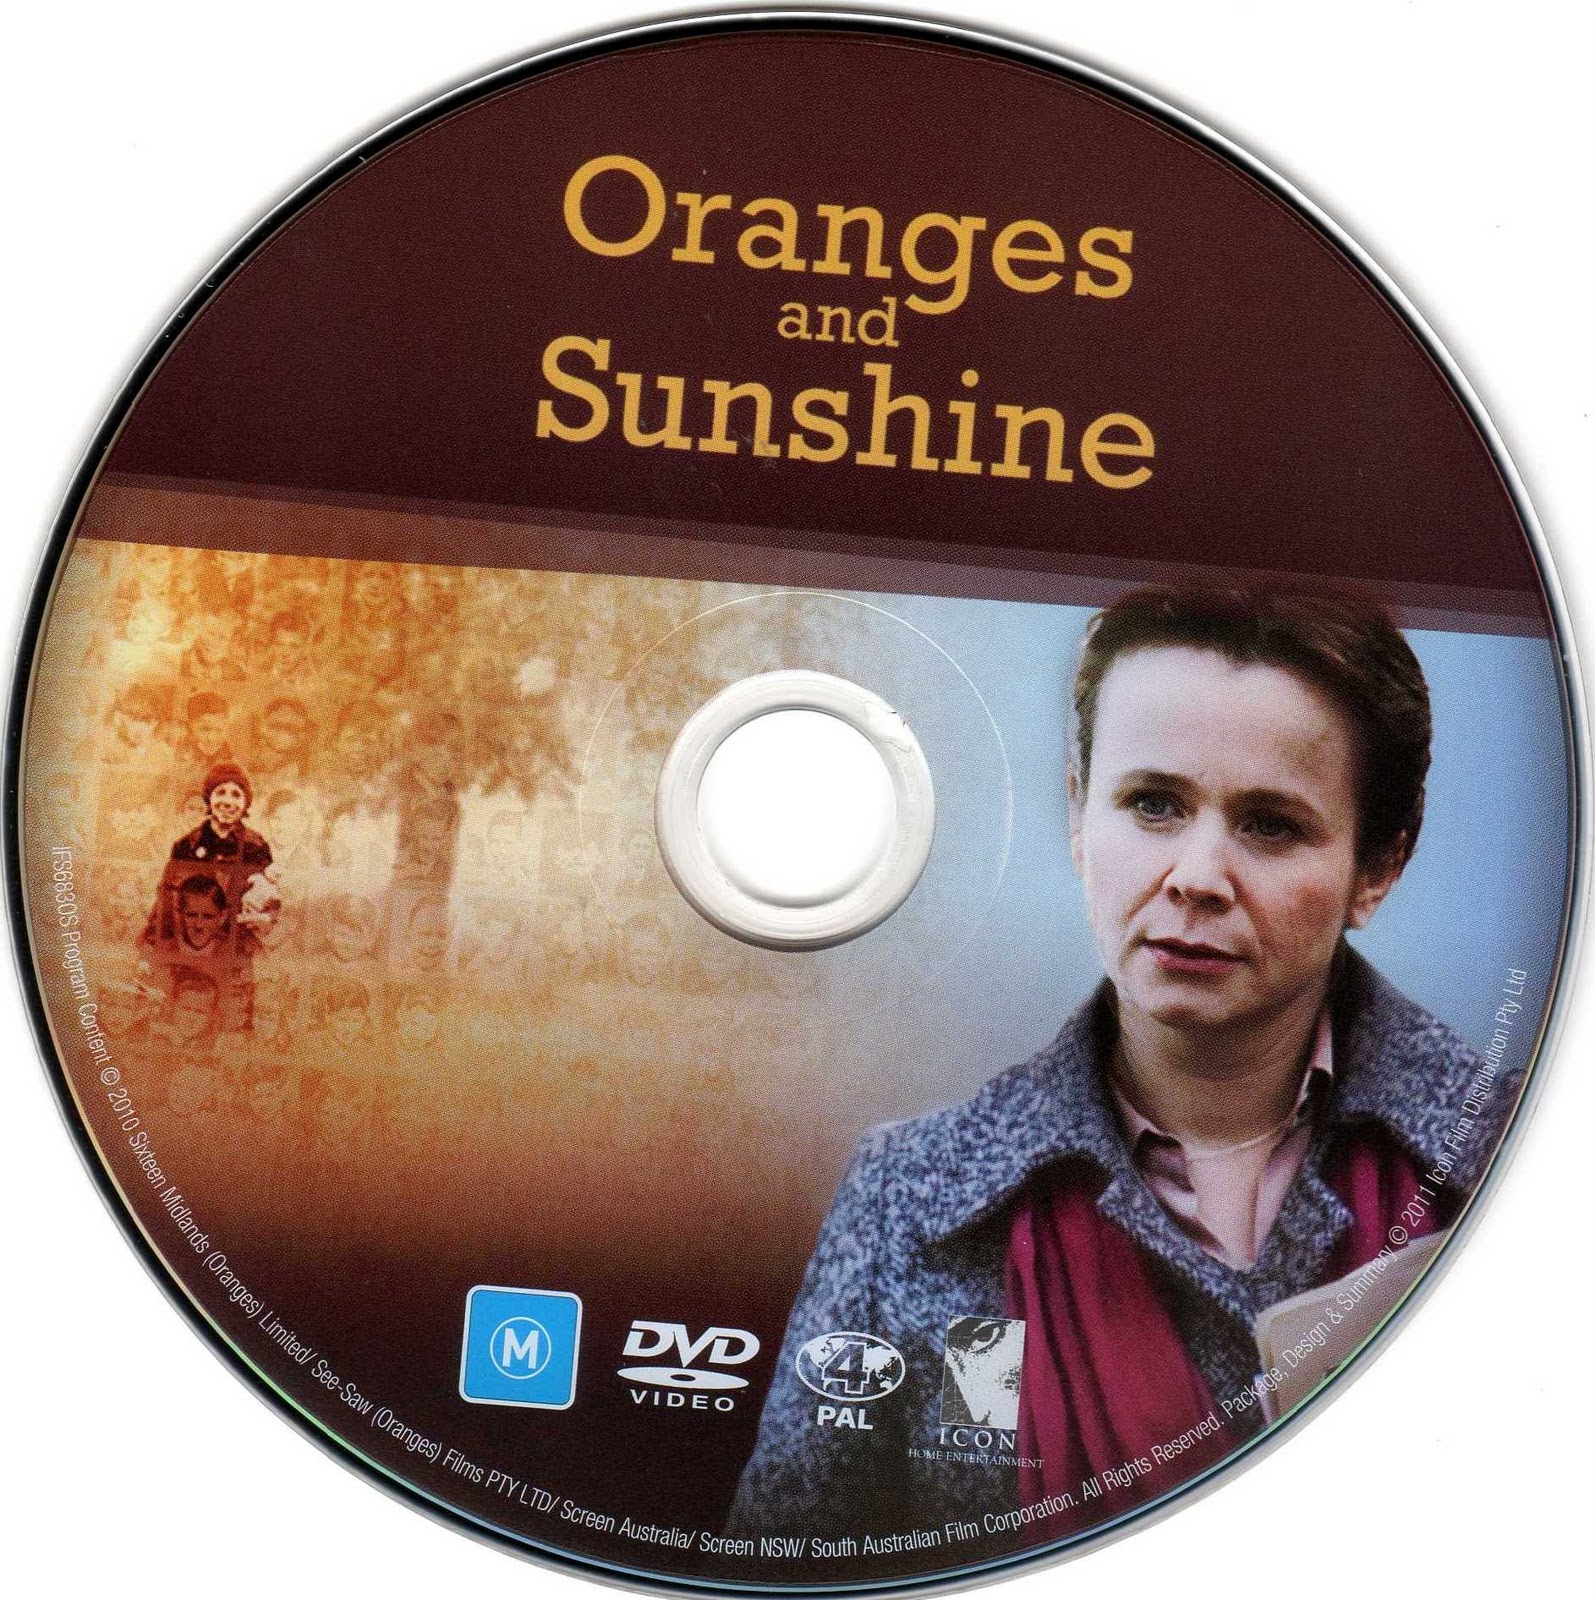 Oranges and Sunshine - Wikipedia